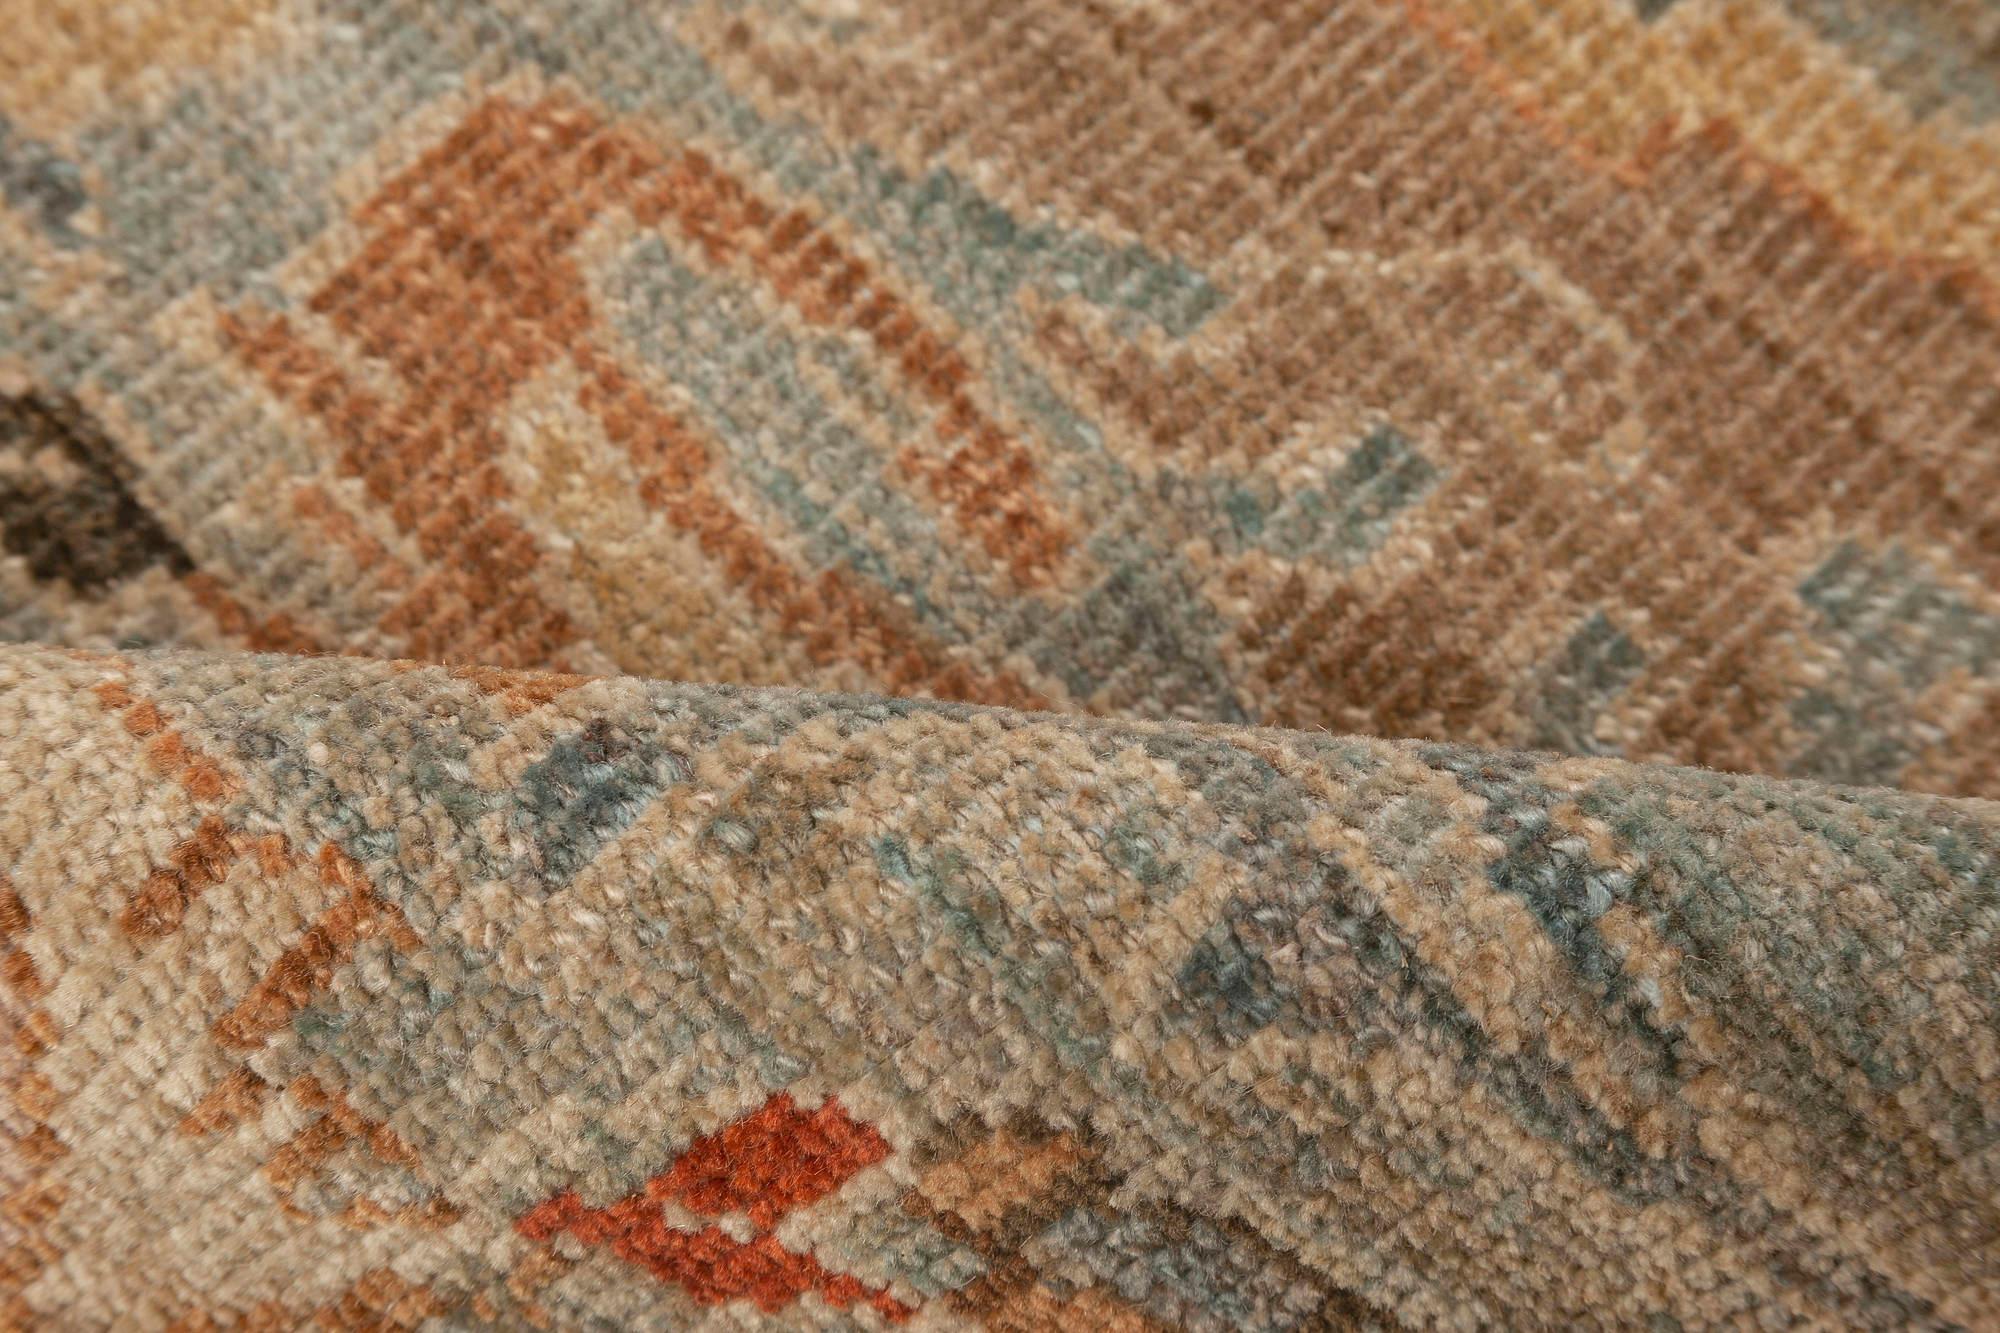 Traditional Sultanabad design handmade wool rug by Doris Leslie Blau.
Size: 12'0